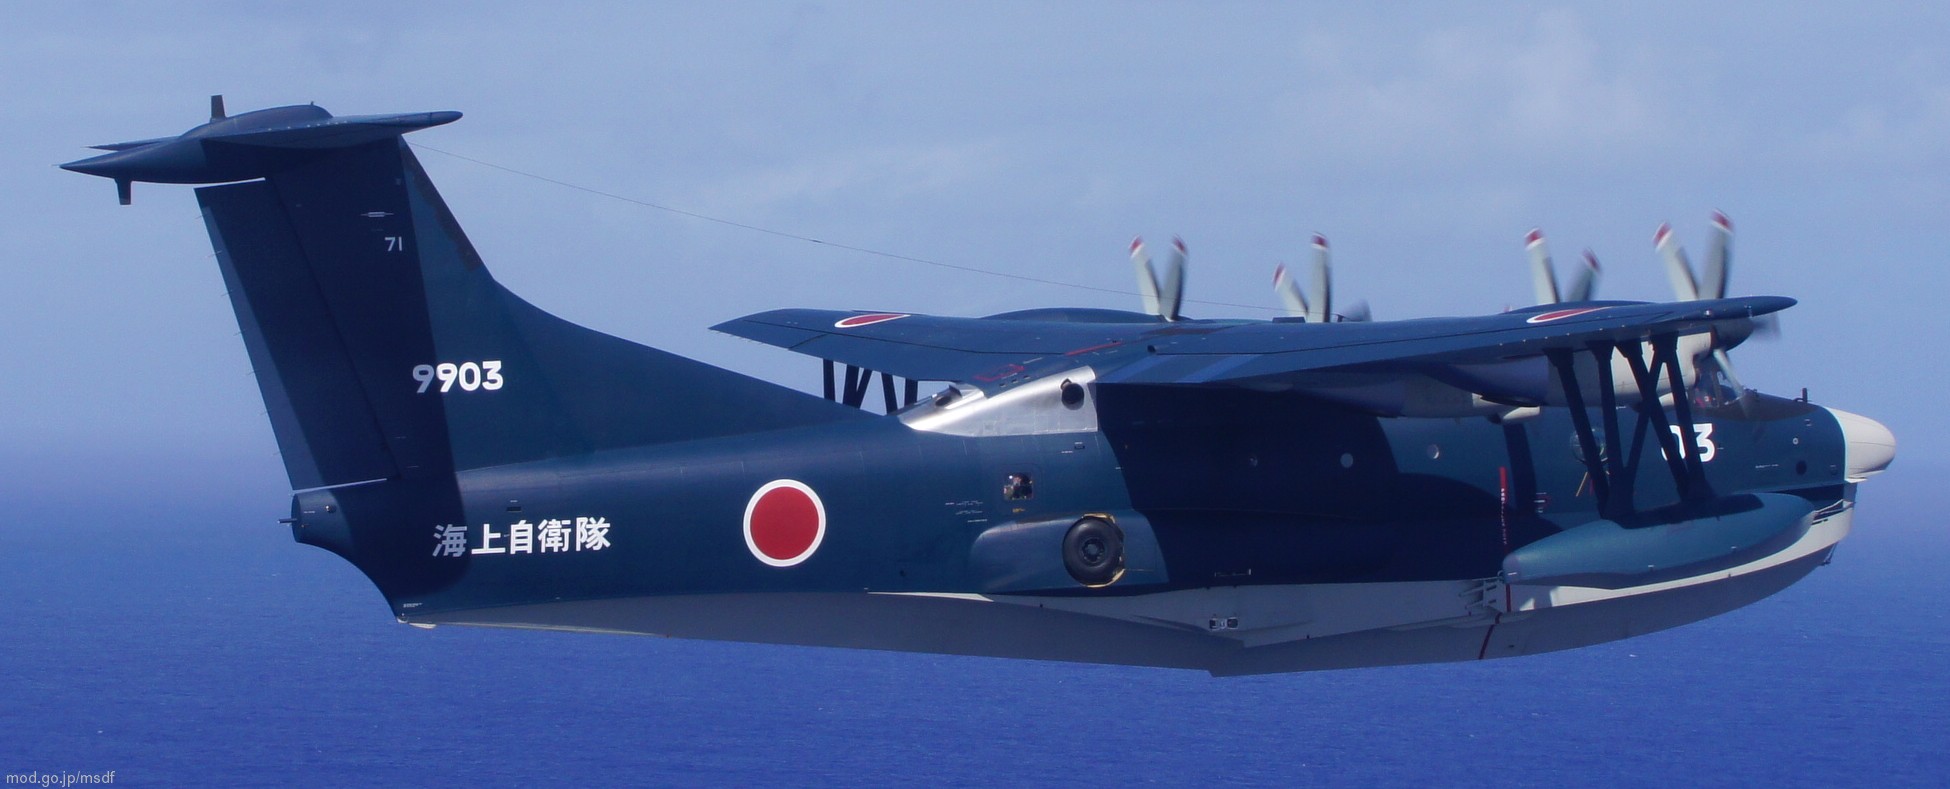 shin maywa us-2 flying boat japan maritime self defense force jmsdf sar 71 squadron atsugi 9903 07